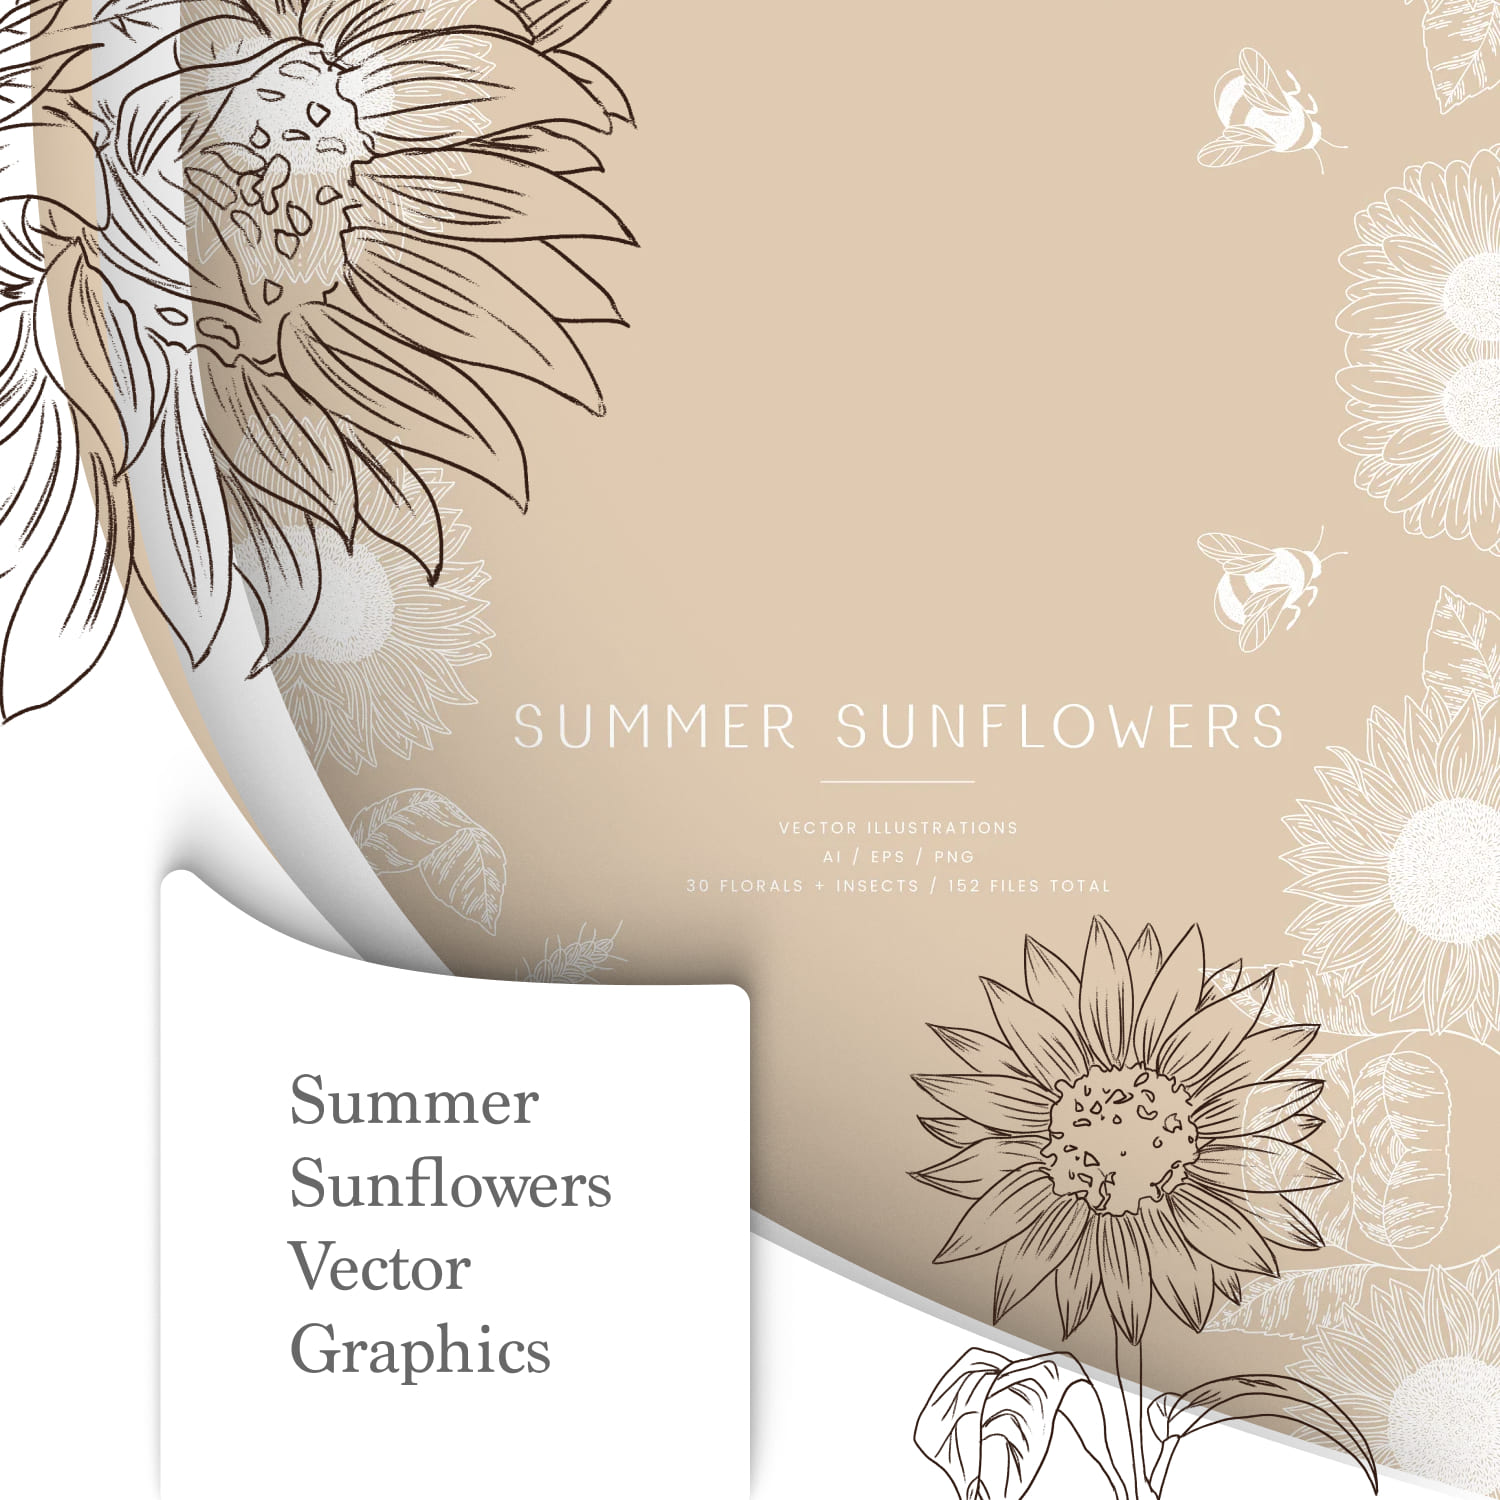 Summer Sunflowers Vector Graphics.